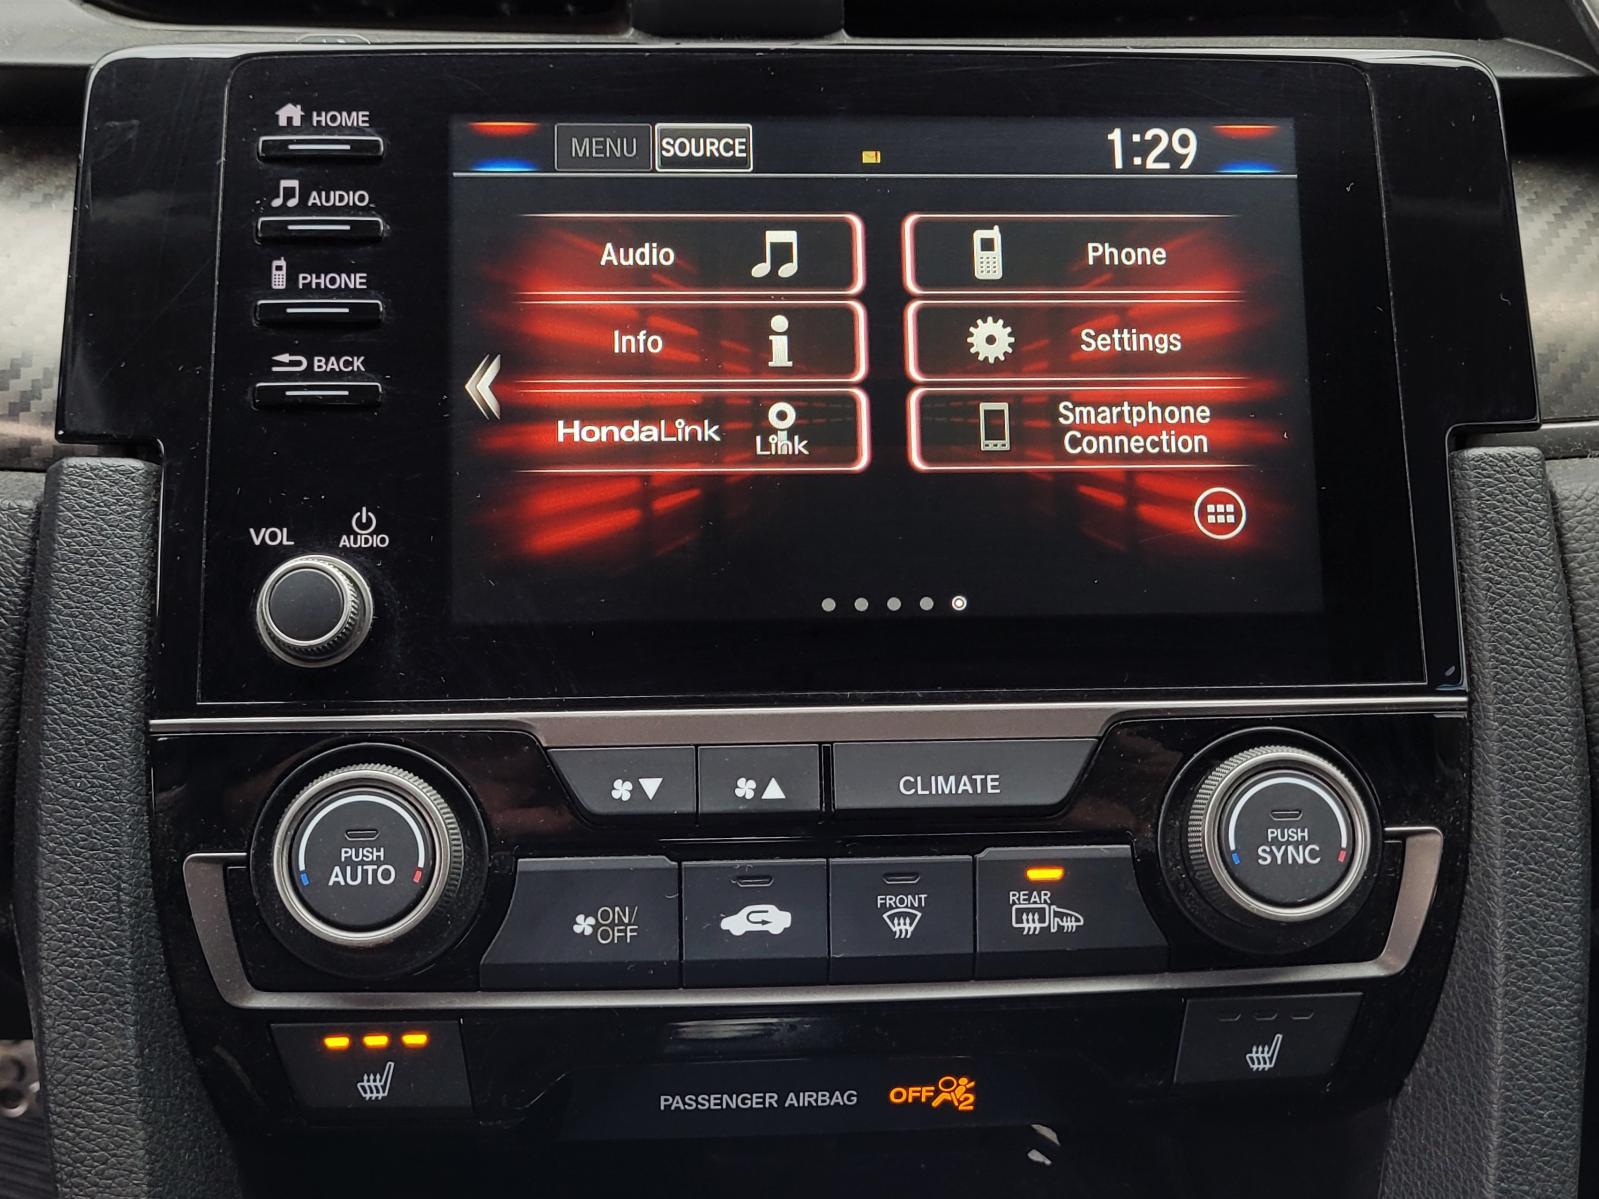 2019 HONDA CIVIC Audio / Video Equipment - Weber Brothers Auto